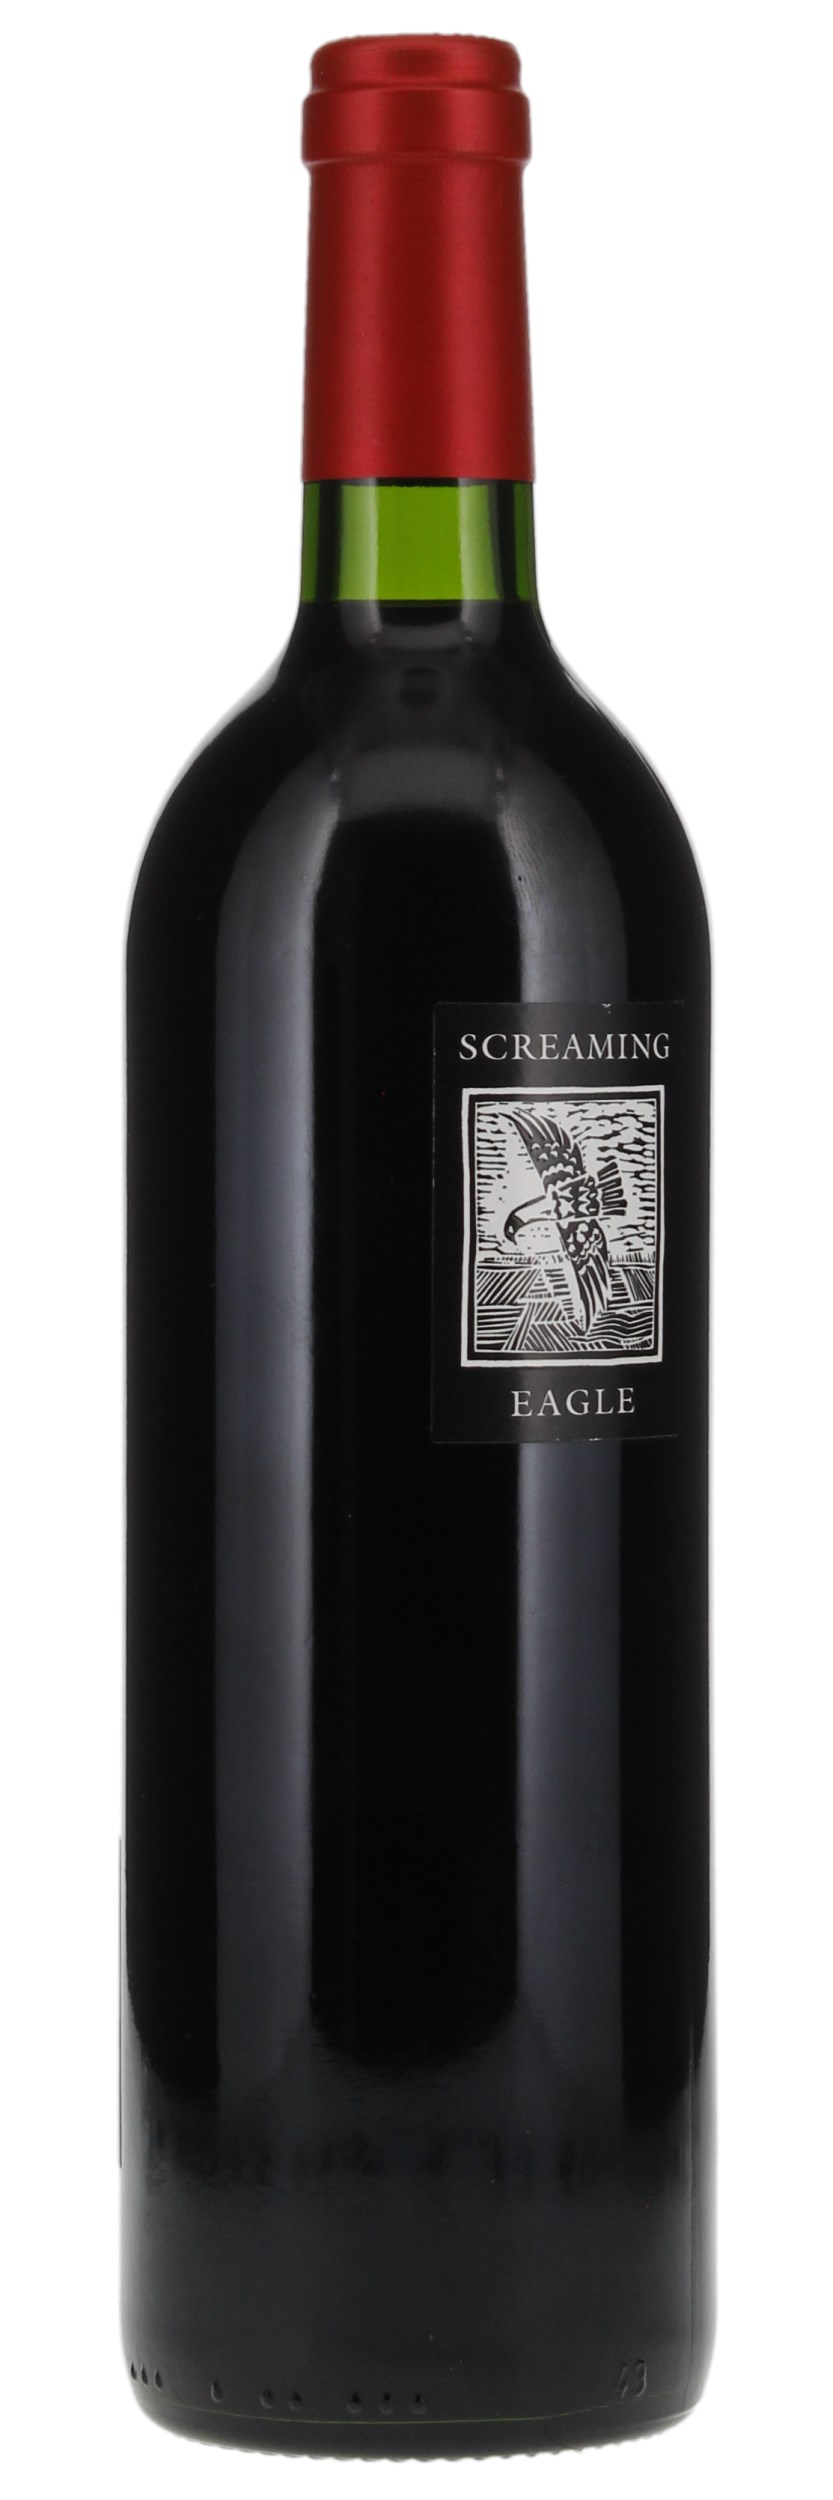 1998 Screaming Eagle Cabernet Sauvignon, 750ml